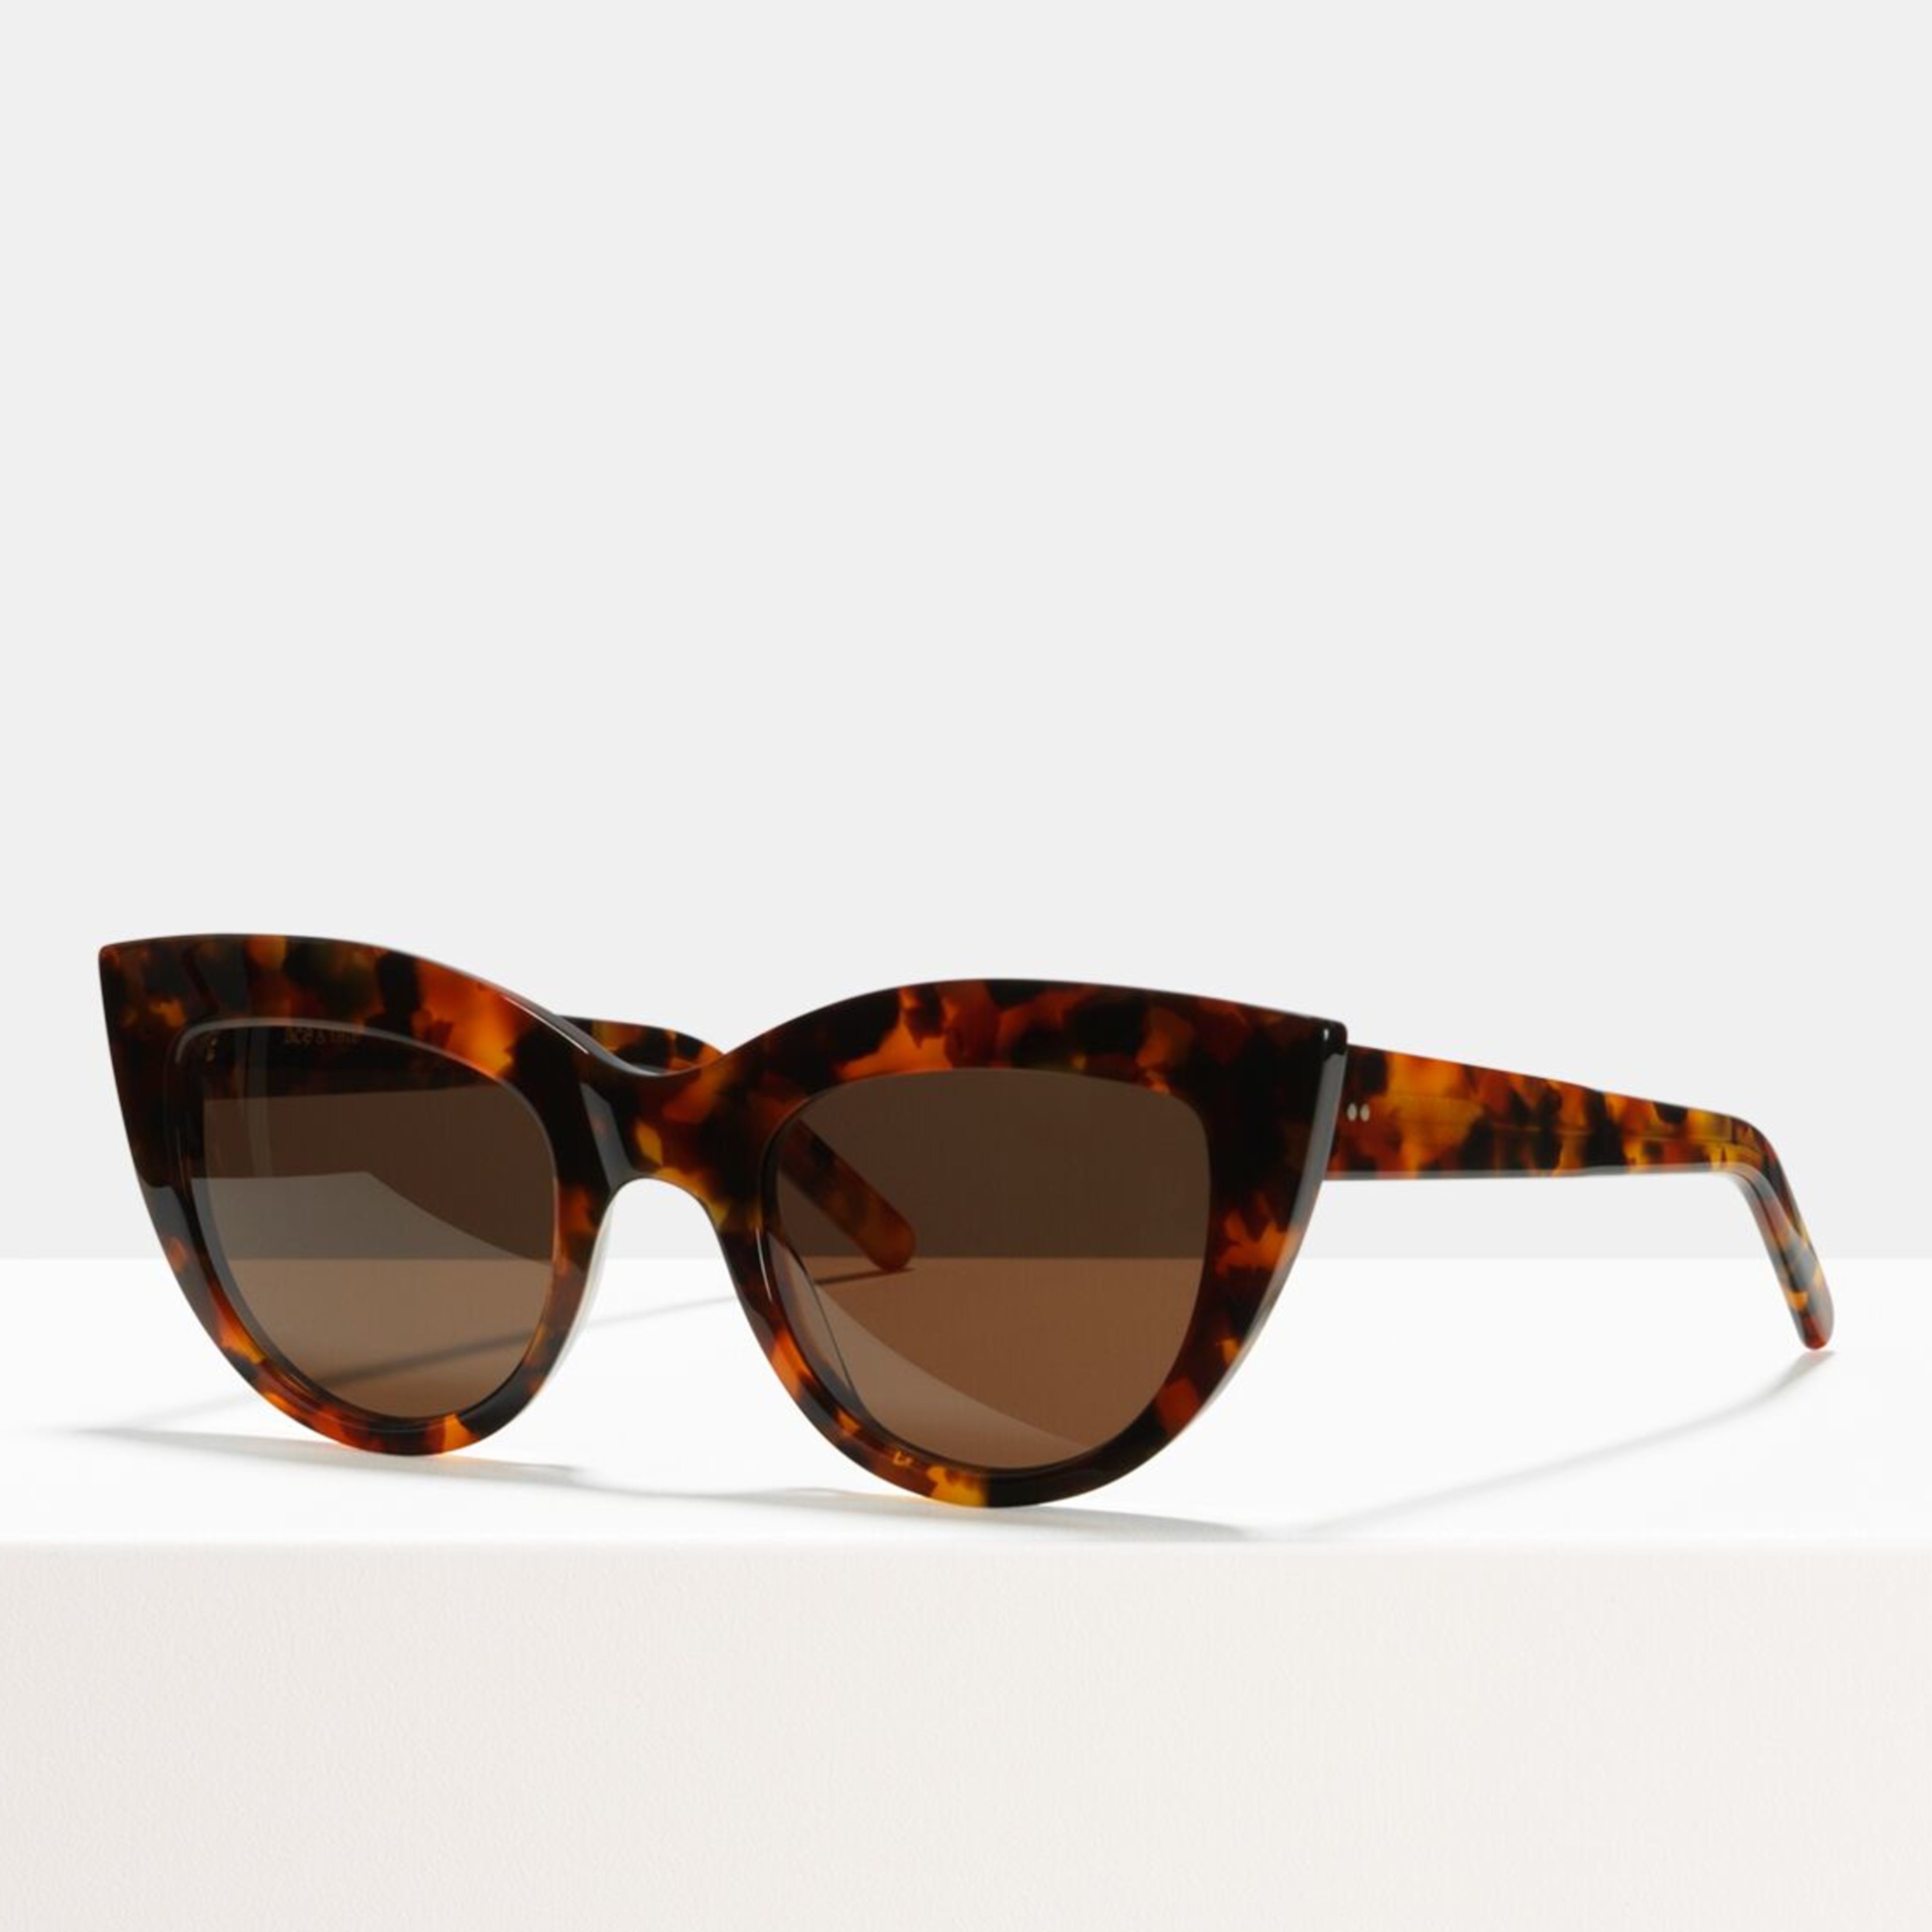 Ace & Tate Sunglasses |  Acetat in Braun, Orange